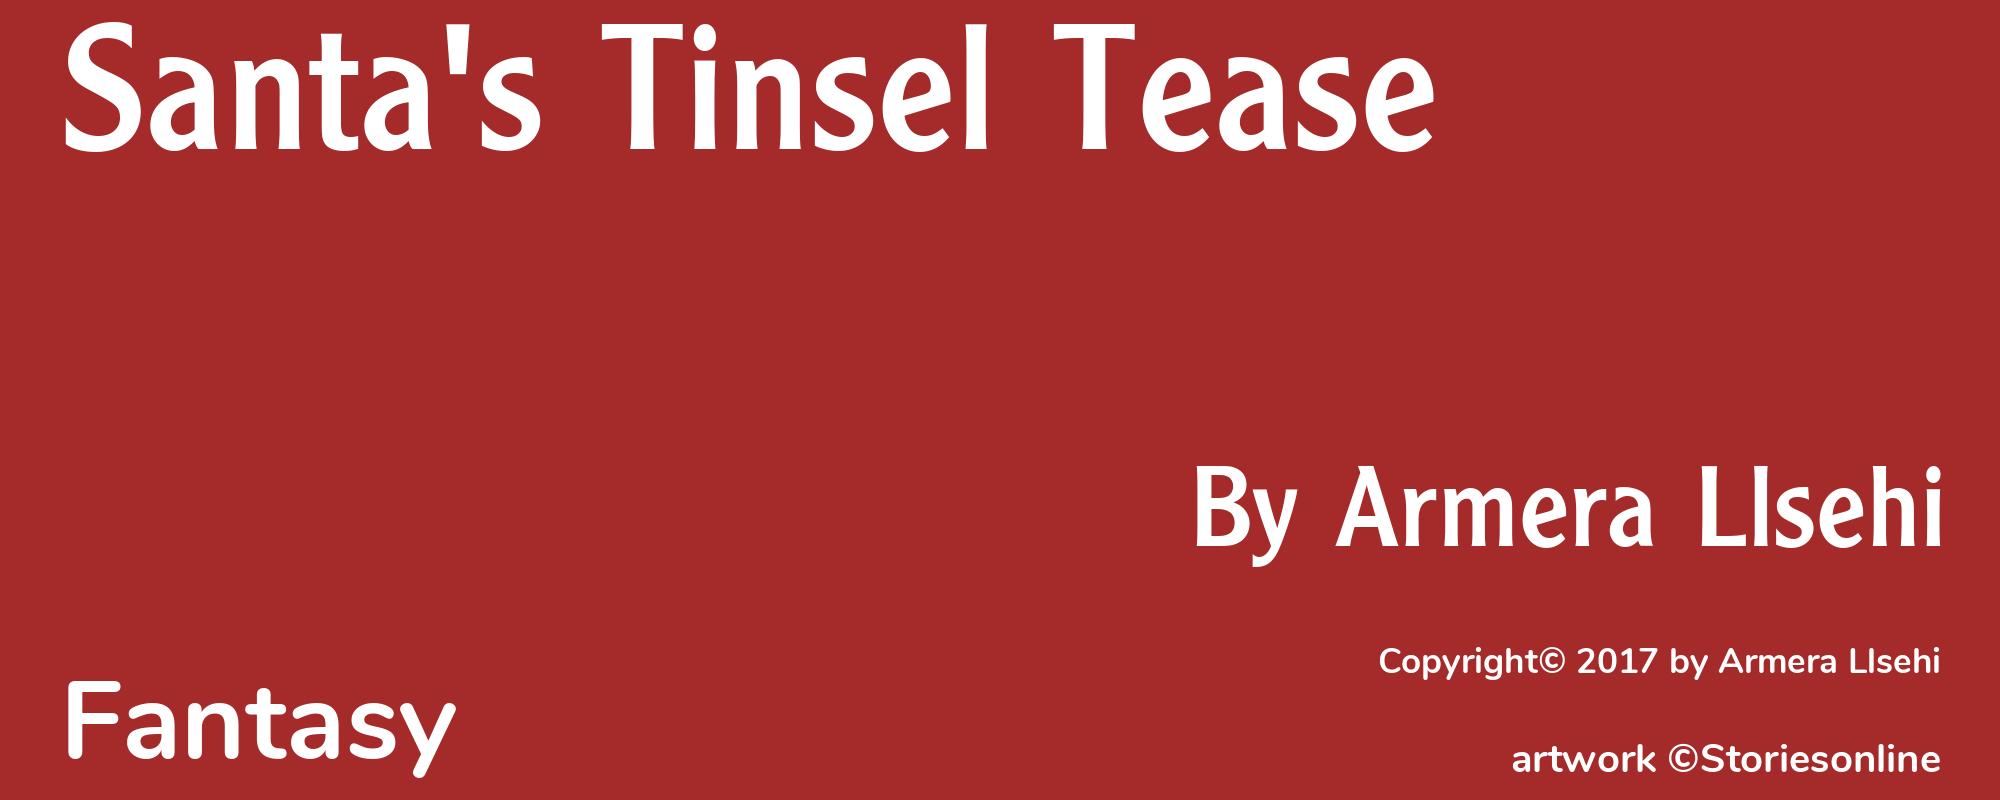 Santa's Tinsel Tease - Cover